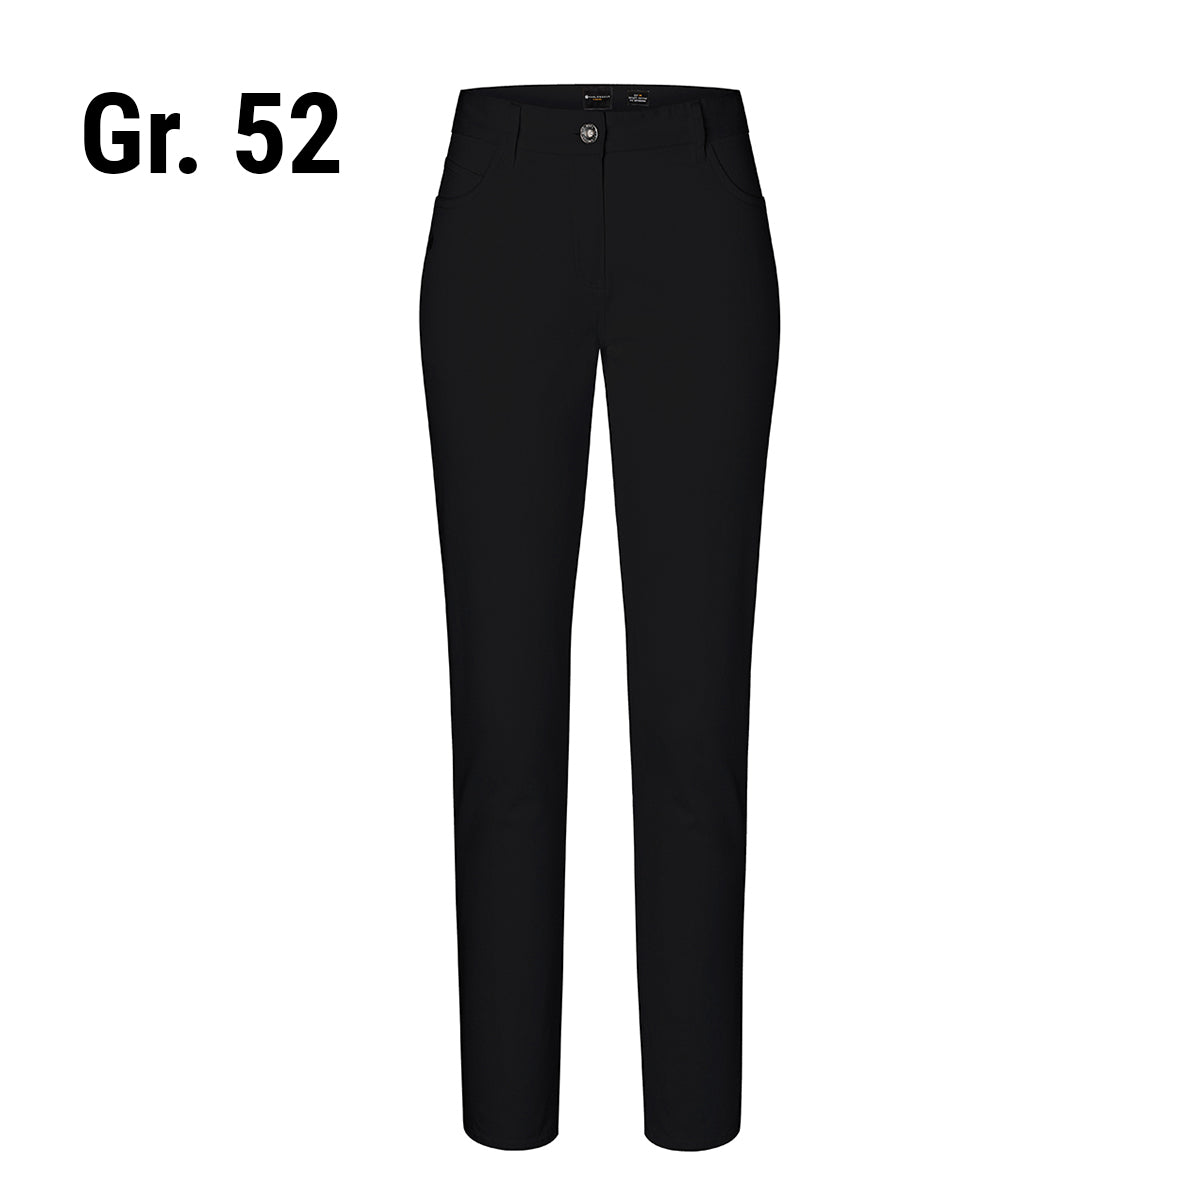 Karlowsky - 5-lomme bukser til damer - Sort - Størrelse: 52